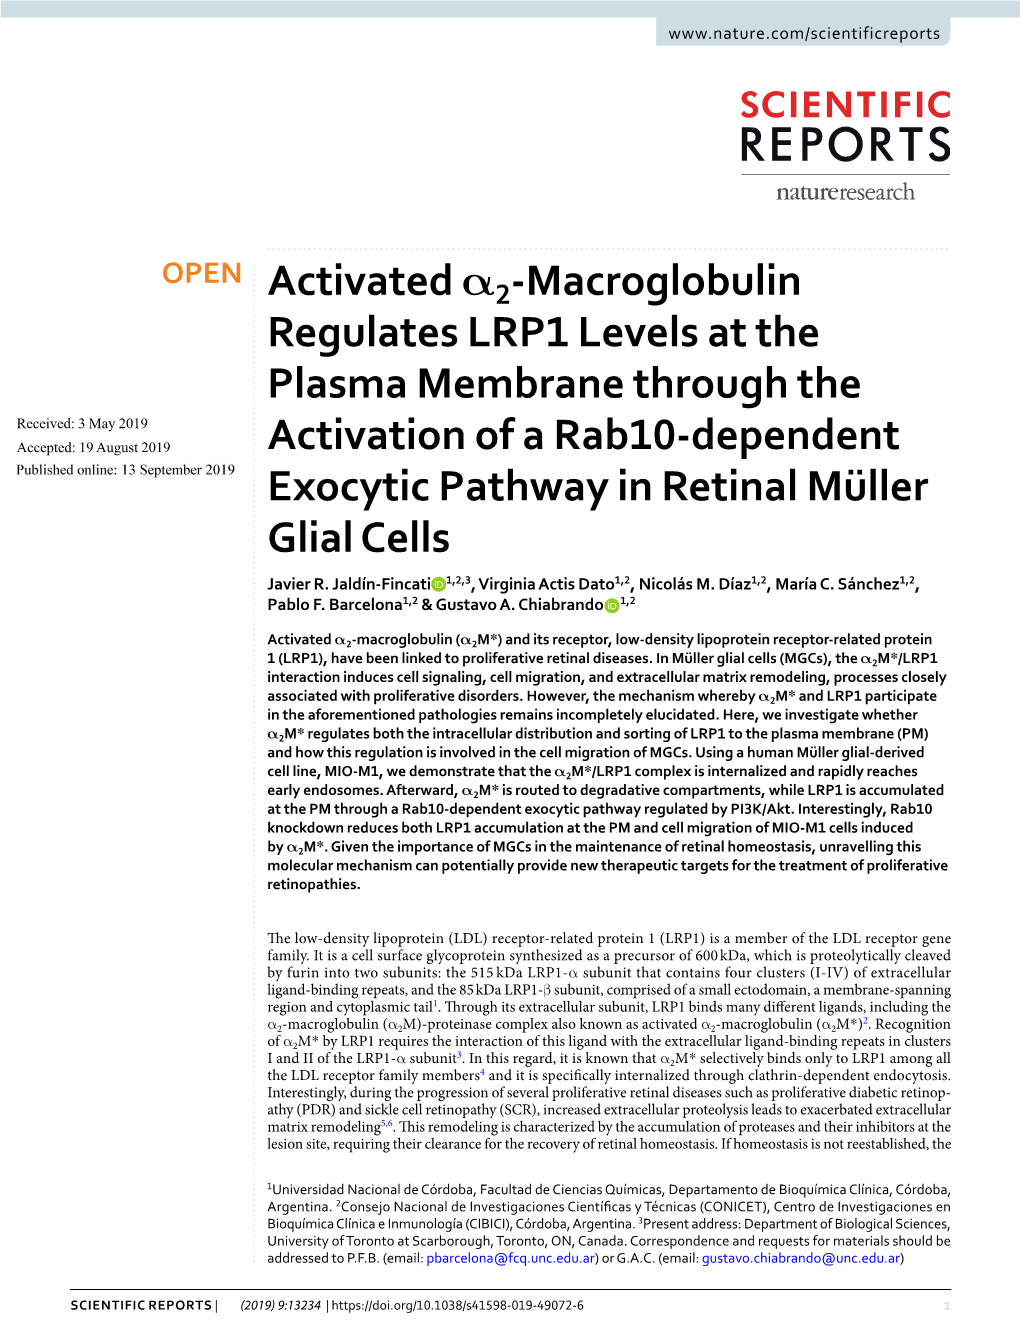 Activated Α2-Macroglobulin Regulates LRP1 Levels at the Plasma